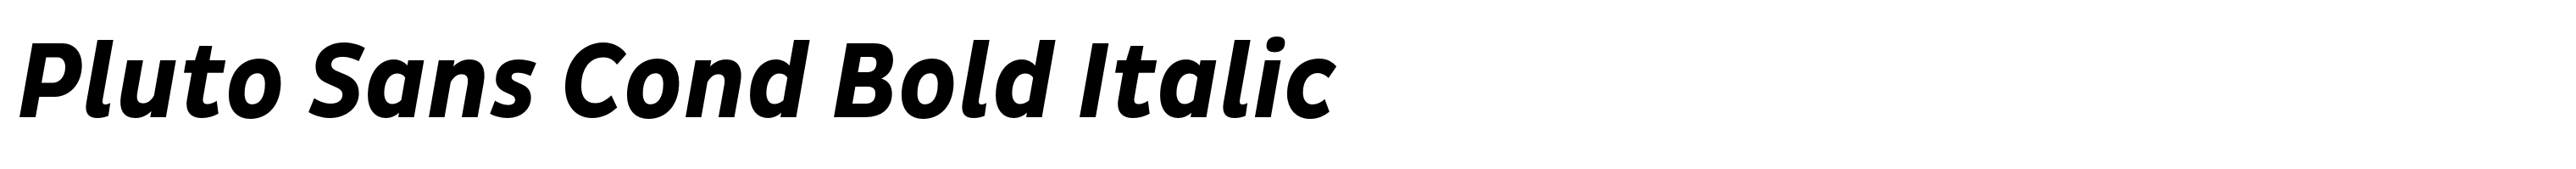 Pluto Sans Cond Bold Italic